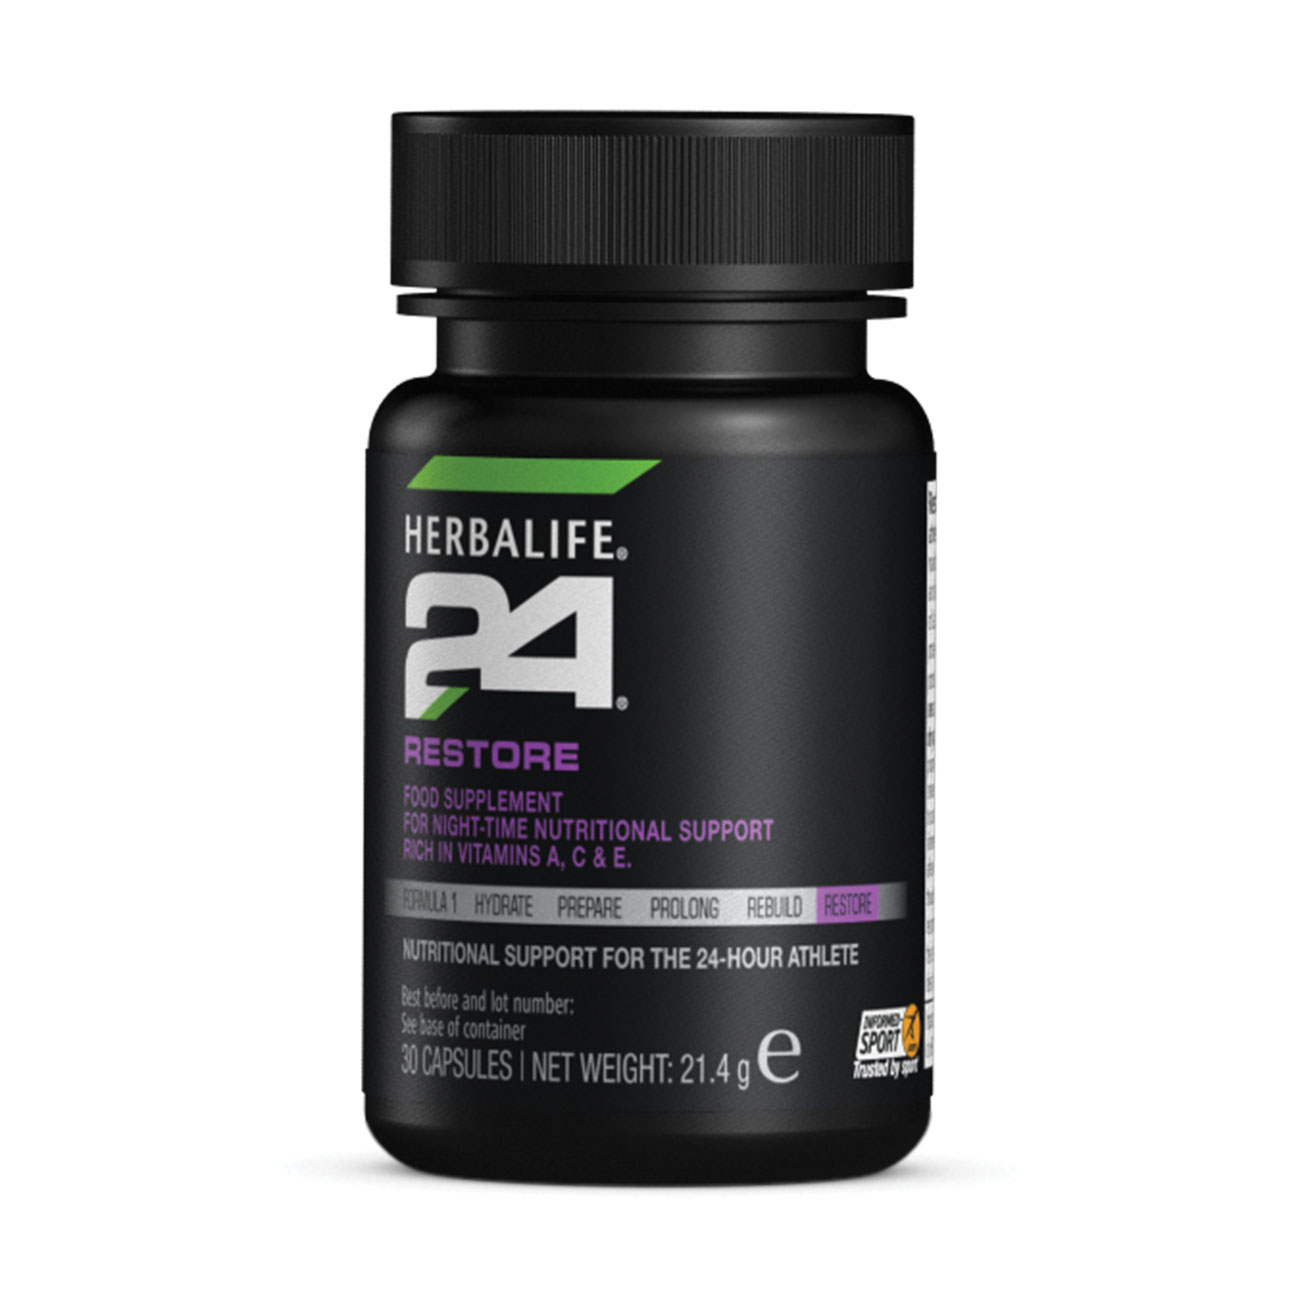 Herbalife24® Restore Multivitamin Supplement product shot